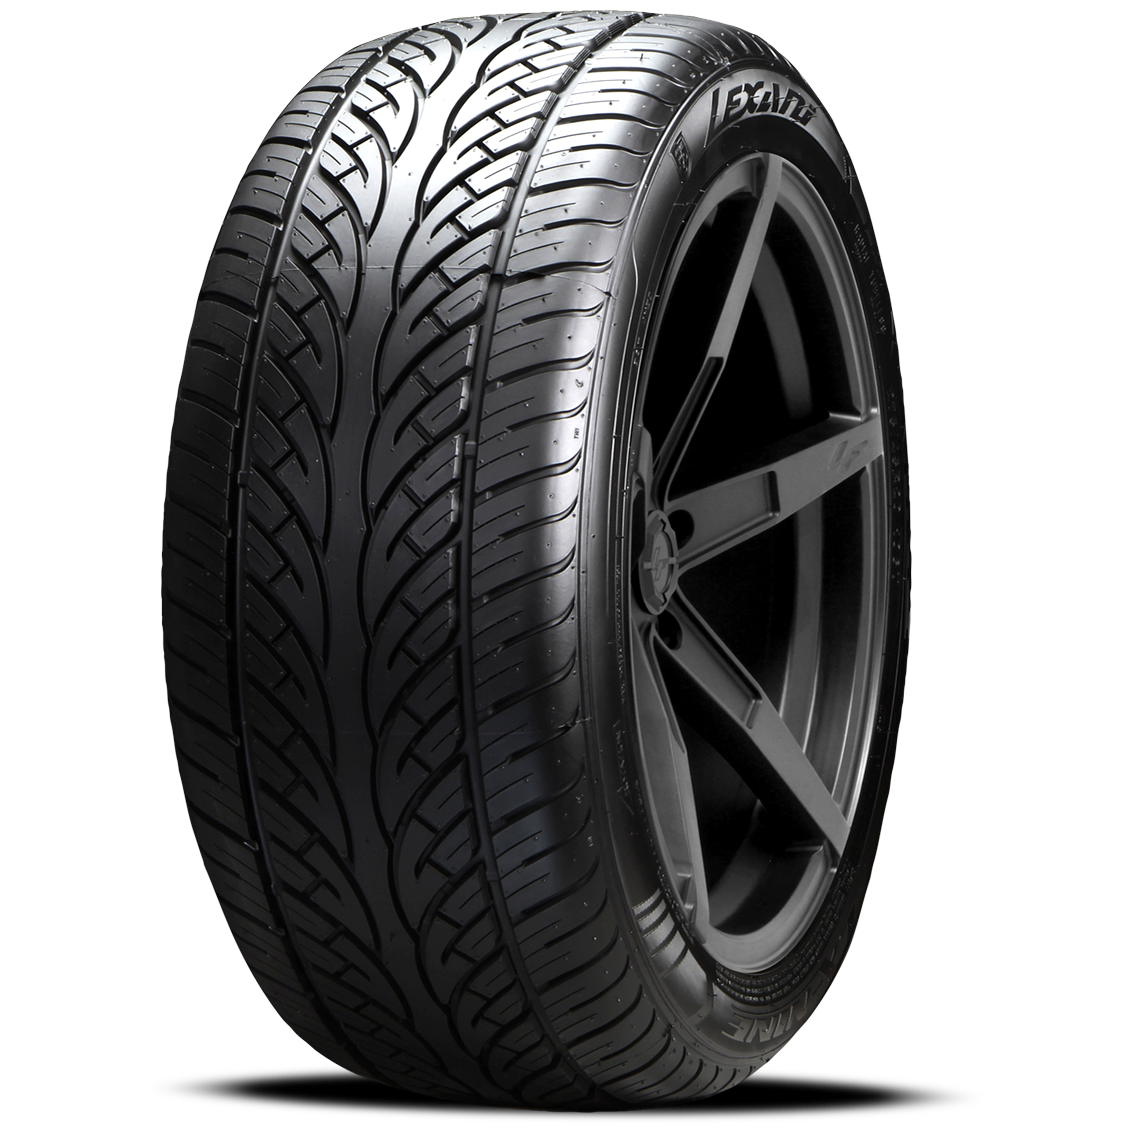 LEXANI LX-NINE 275/45R20 (29.8X10.8R 20) Tires